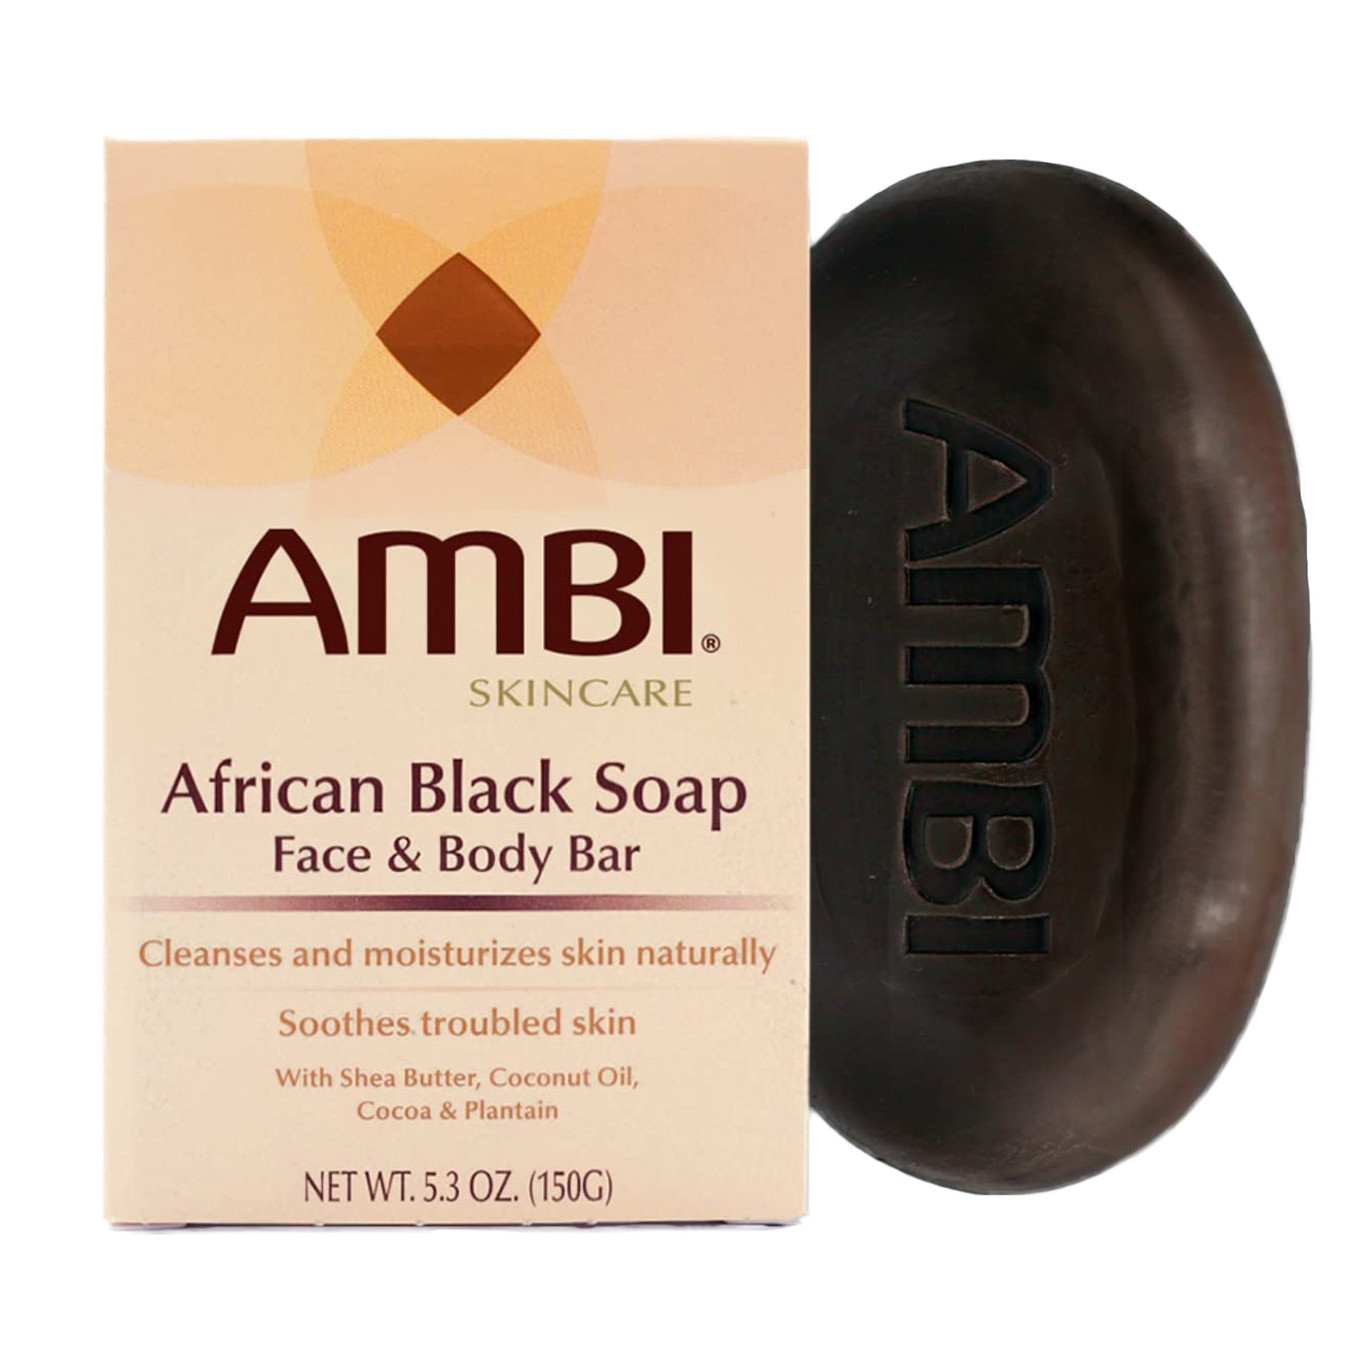 Ambi African Black Soap Face & Body Bar (5.3 oz)